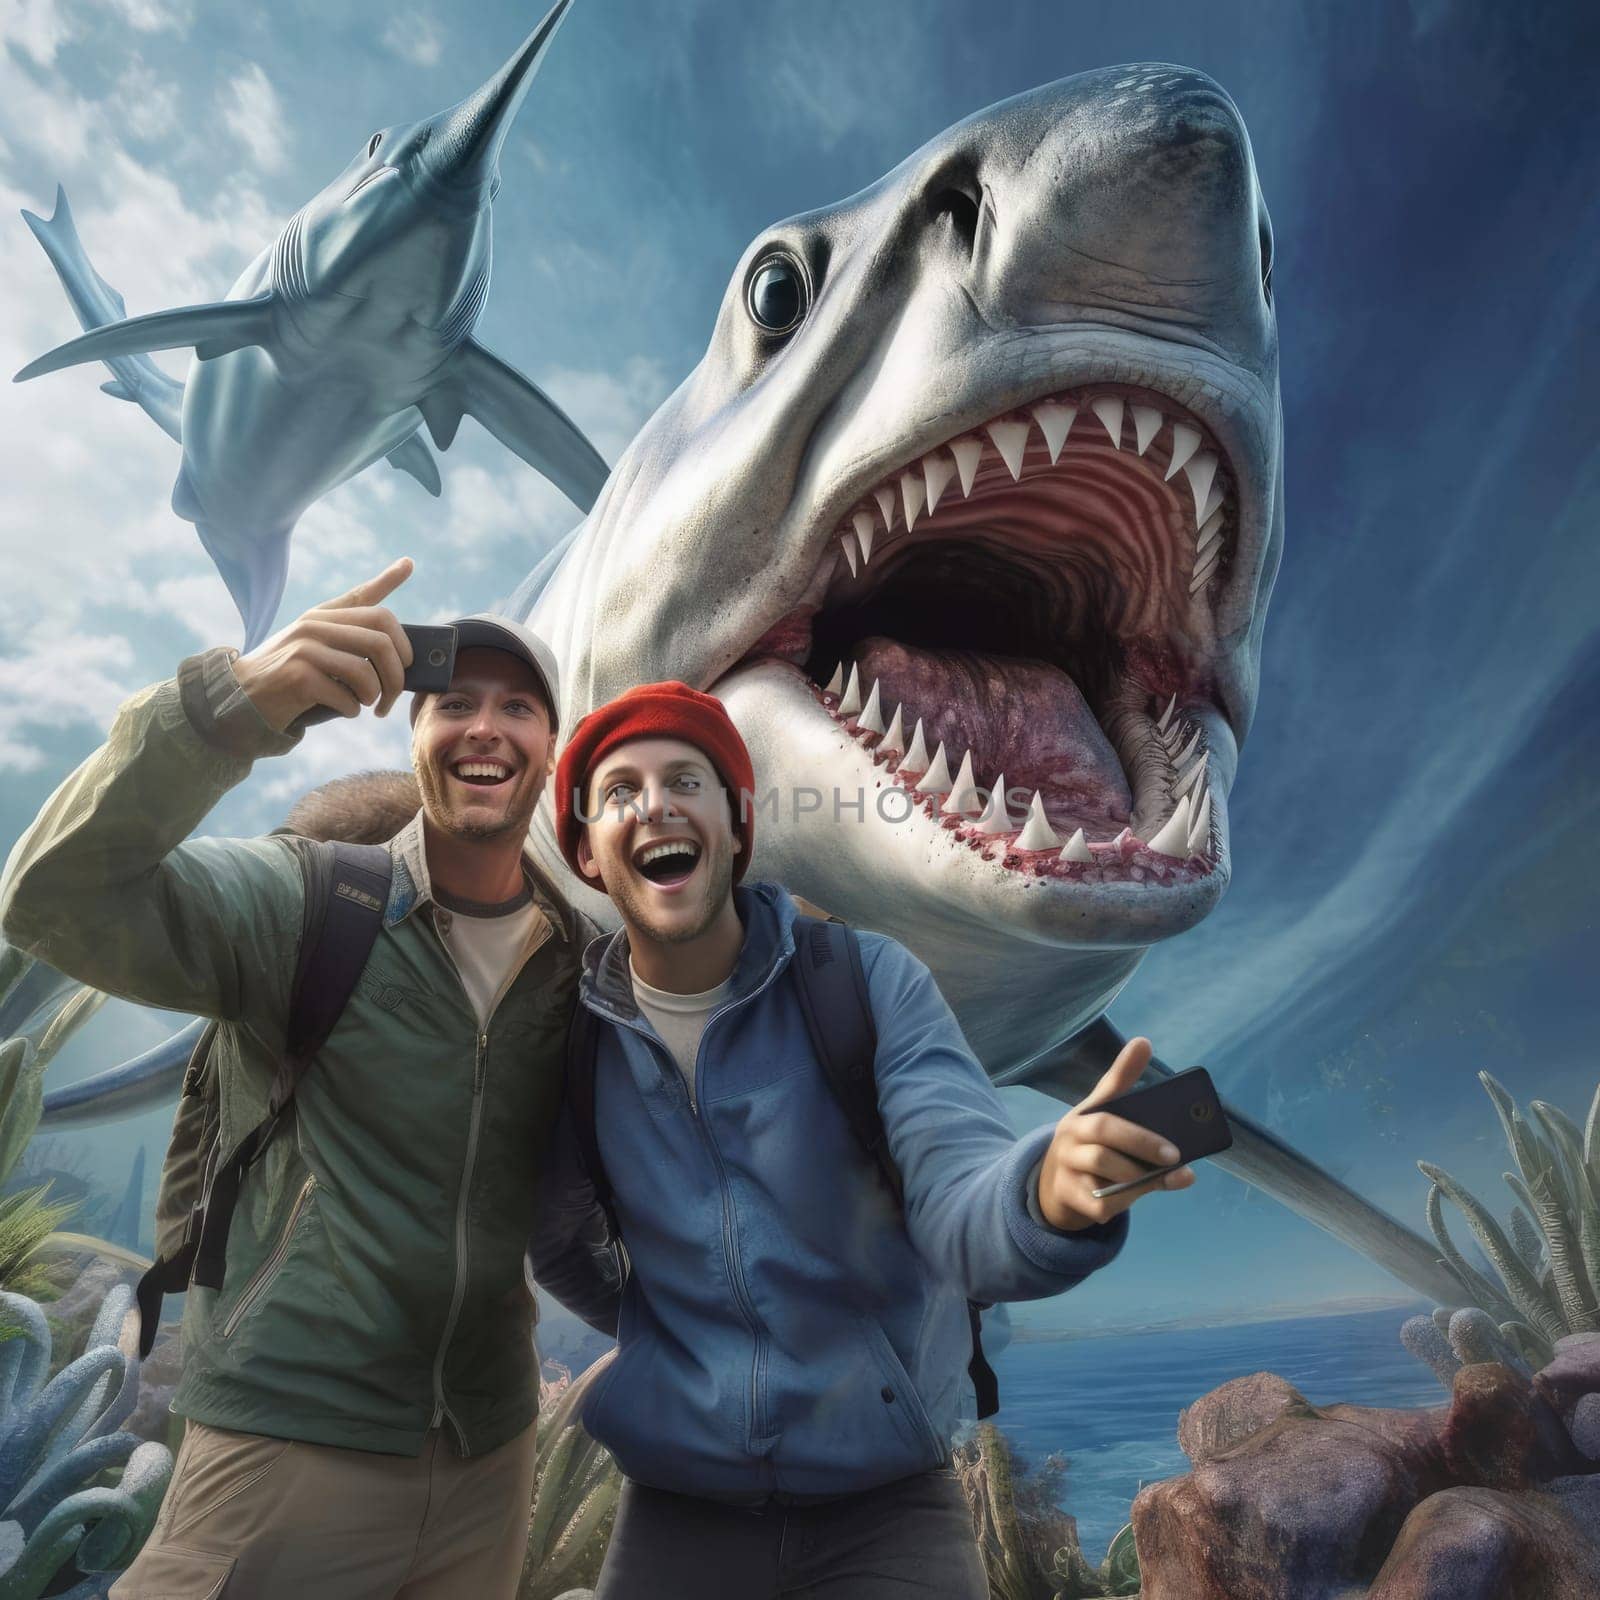 Joyful people take selfies with a huge shark. Rest